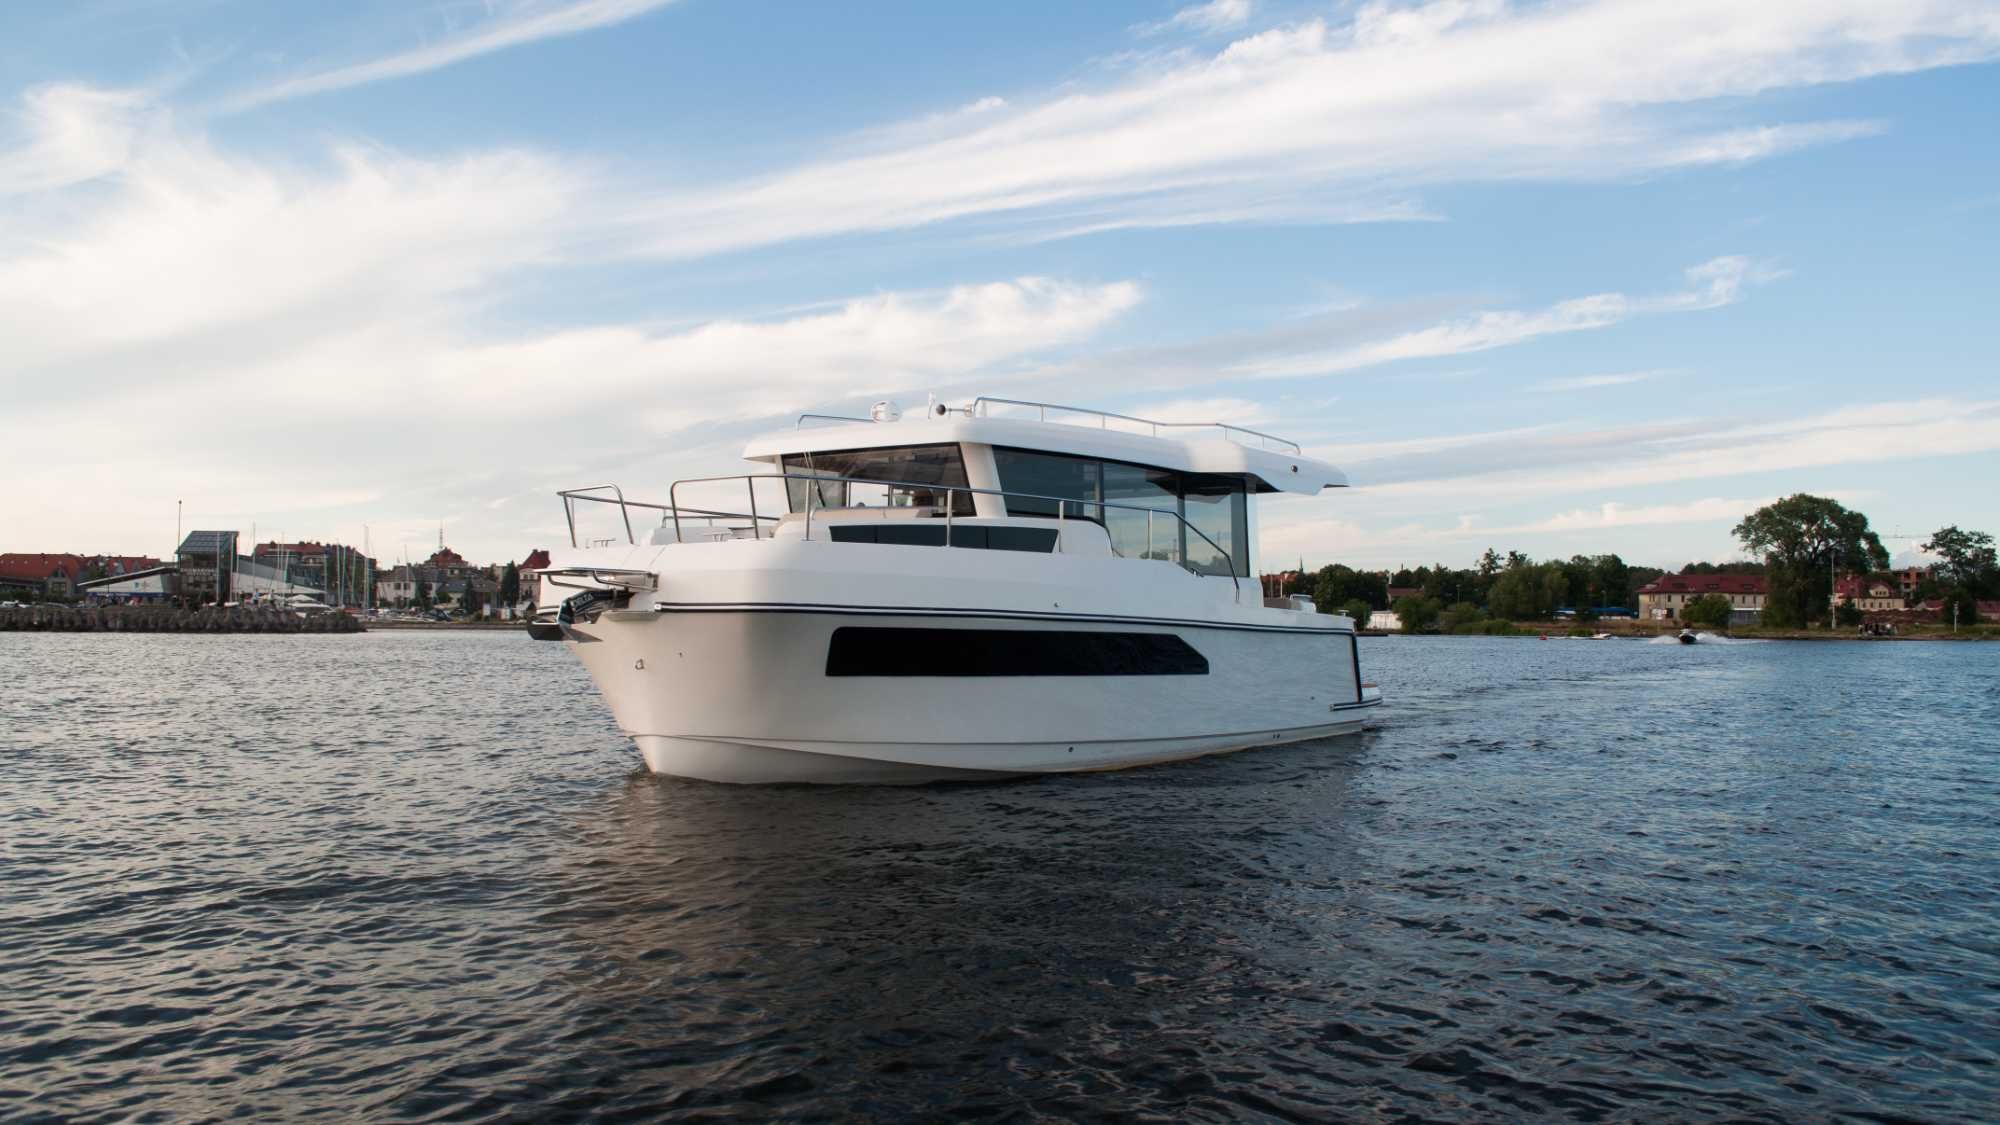 Jacht motorowy Lamdo Yachts LY30+ Houseboat nowy